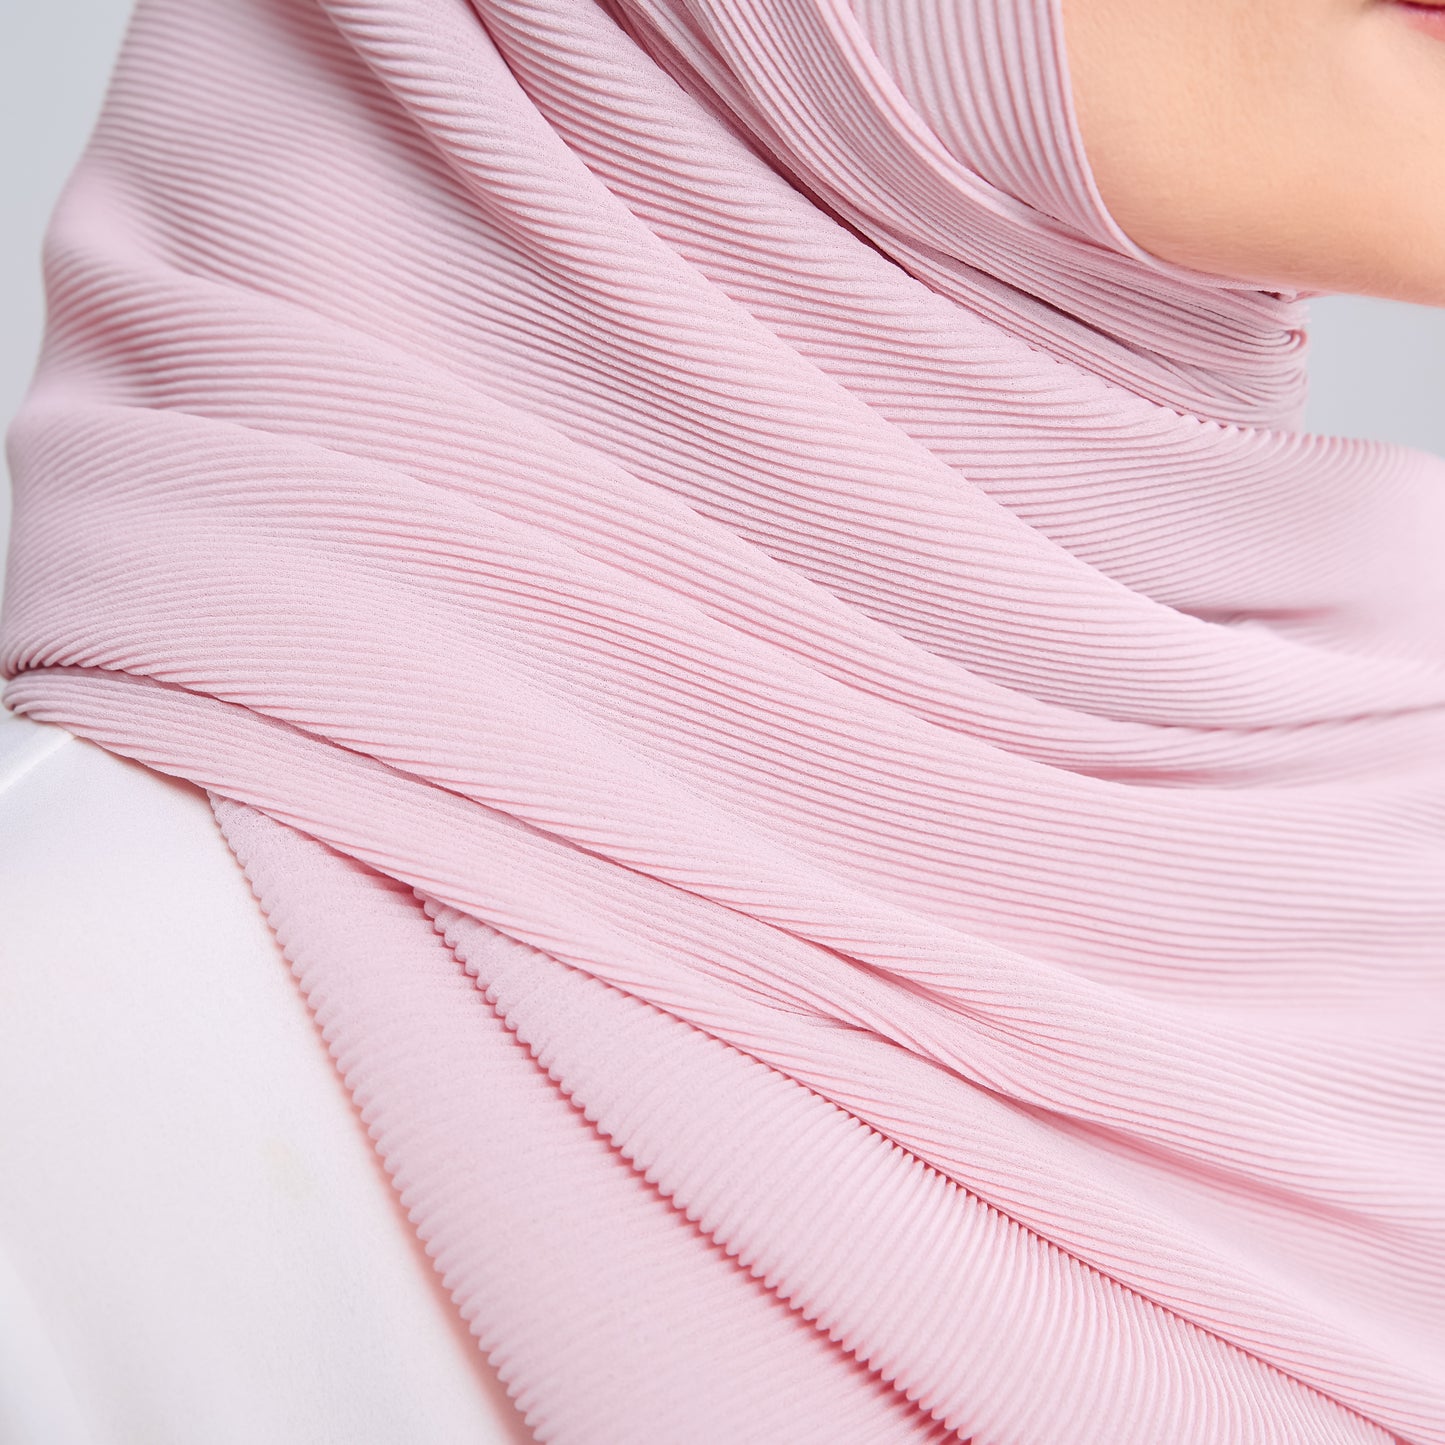 Zara Micropleats in Blush Pink